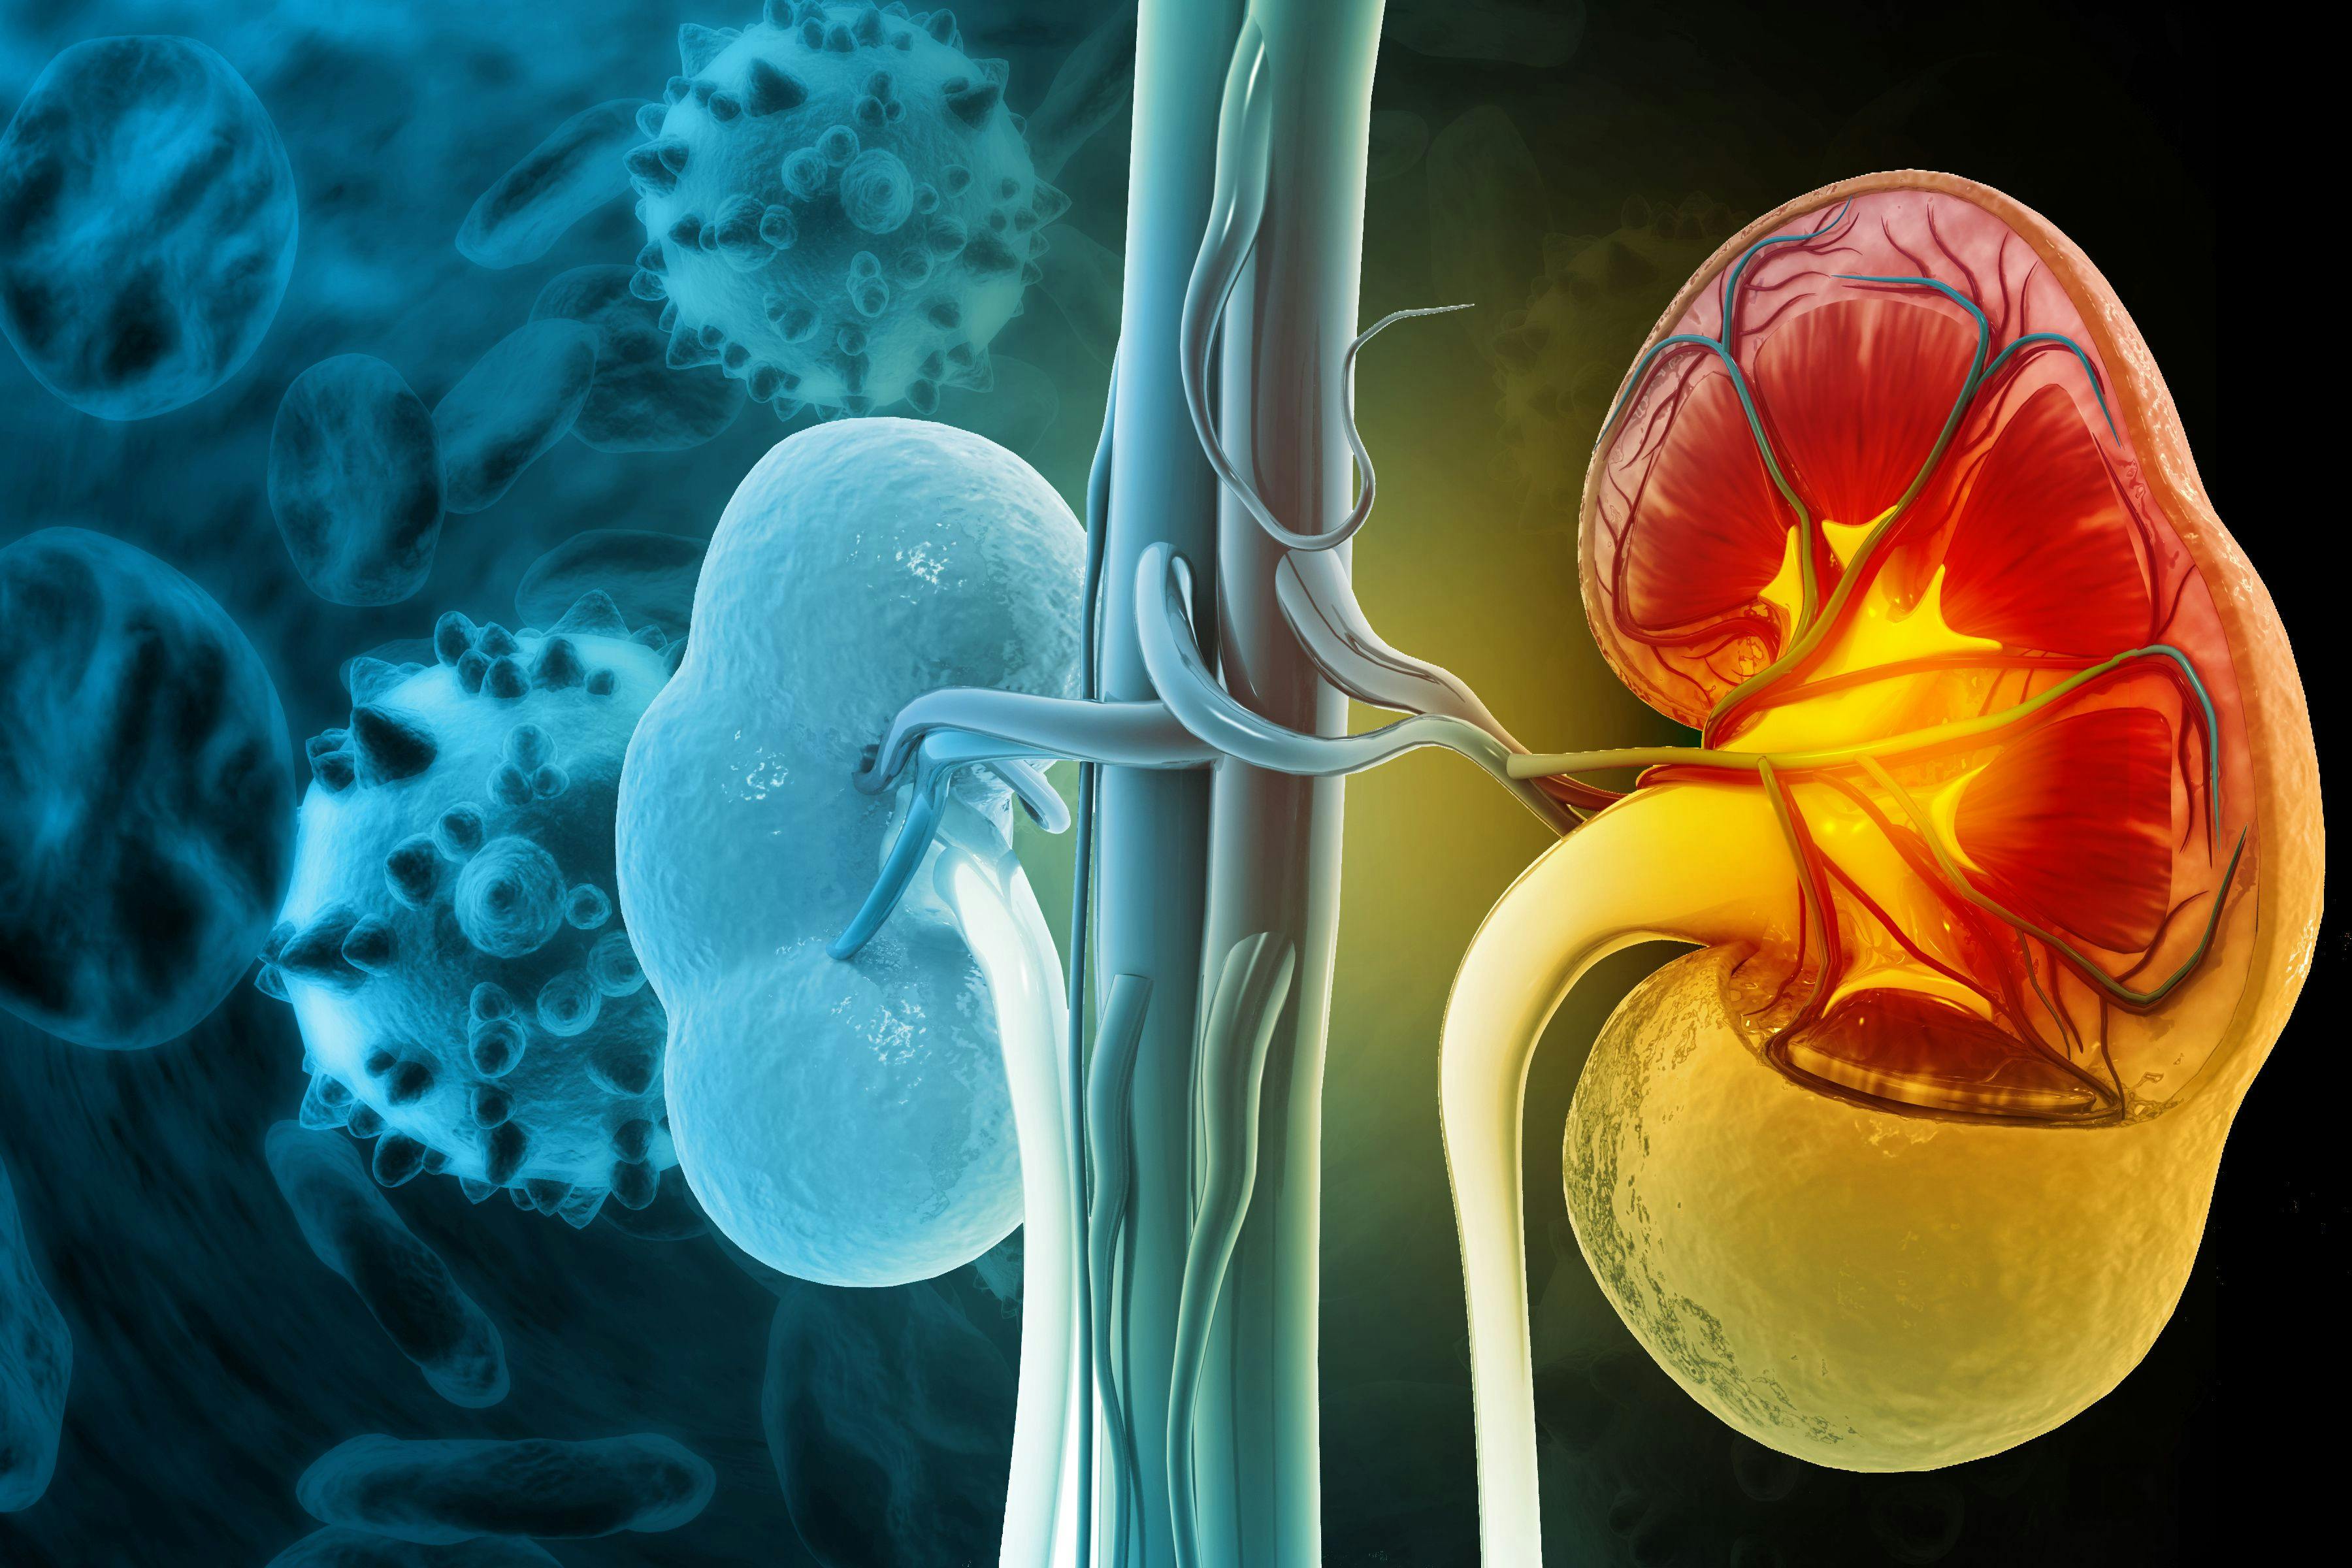 Chronic kidney disease. 3d illustration | Image Credit: Crystal light - stock.adobe.com